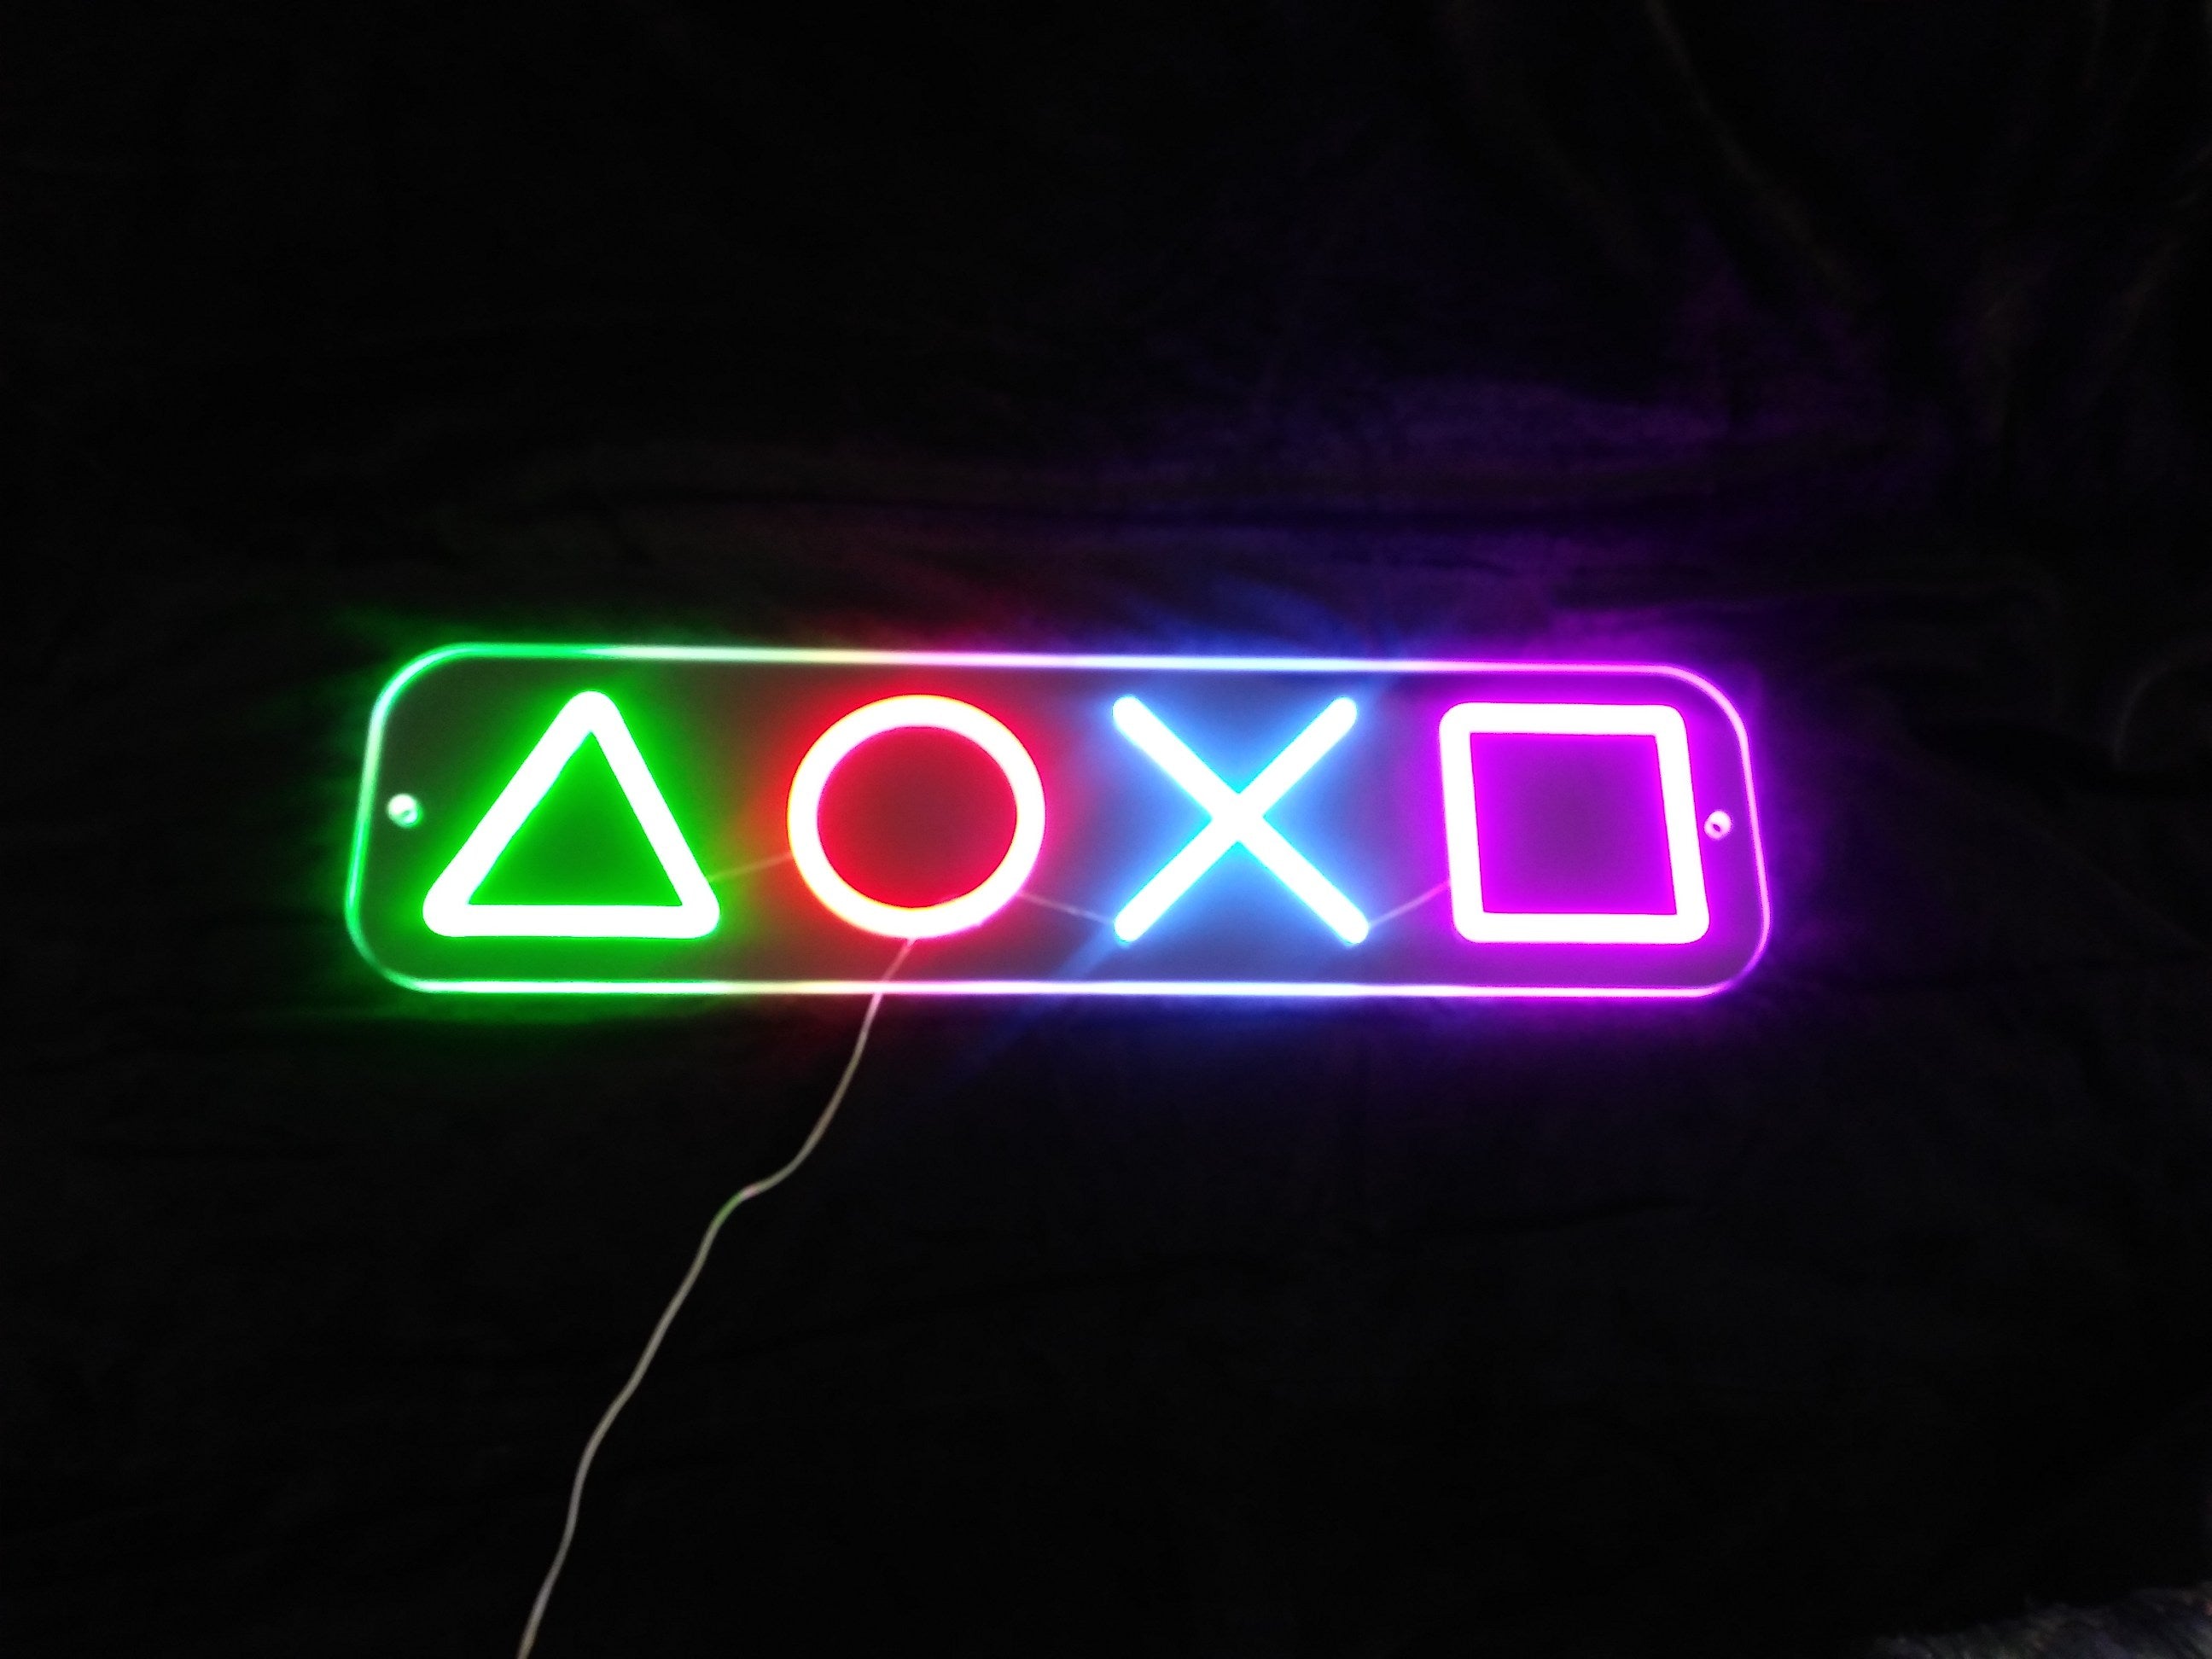 Playstation Symbols Neon Sign For Arcade - Man-Cave Custom Neon Sign NeonChili